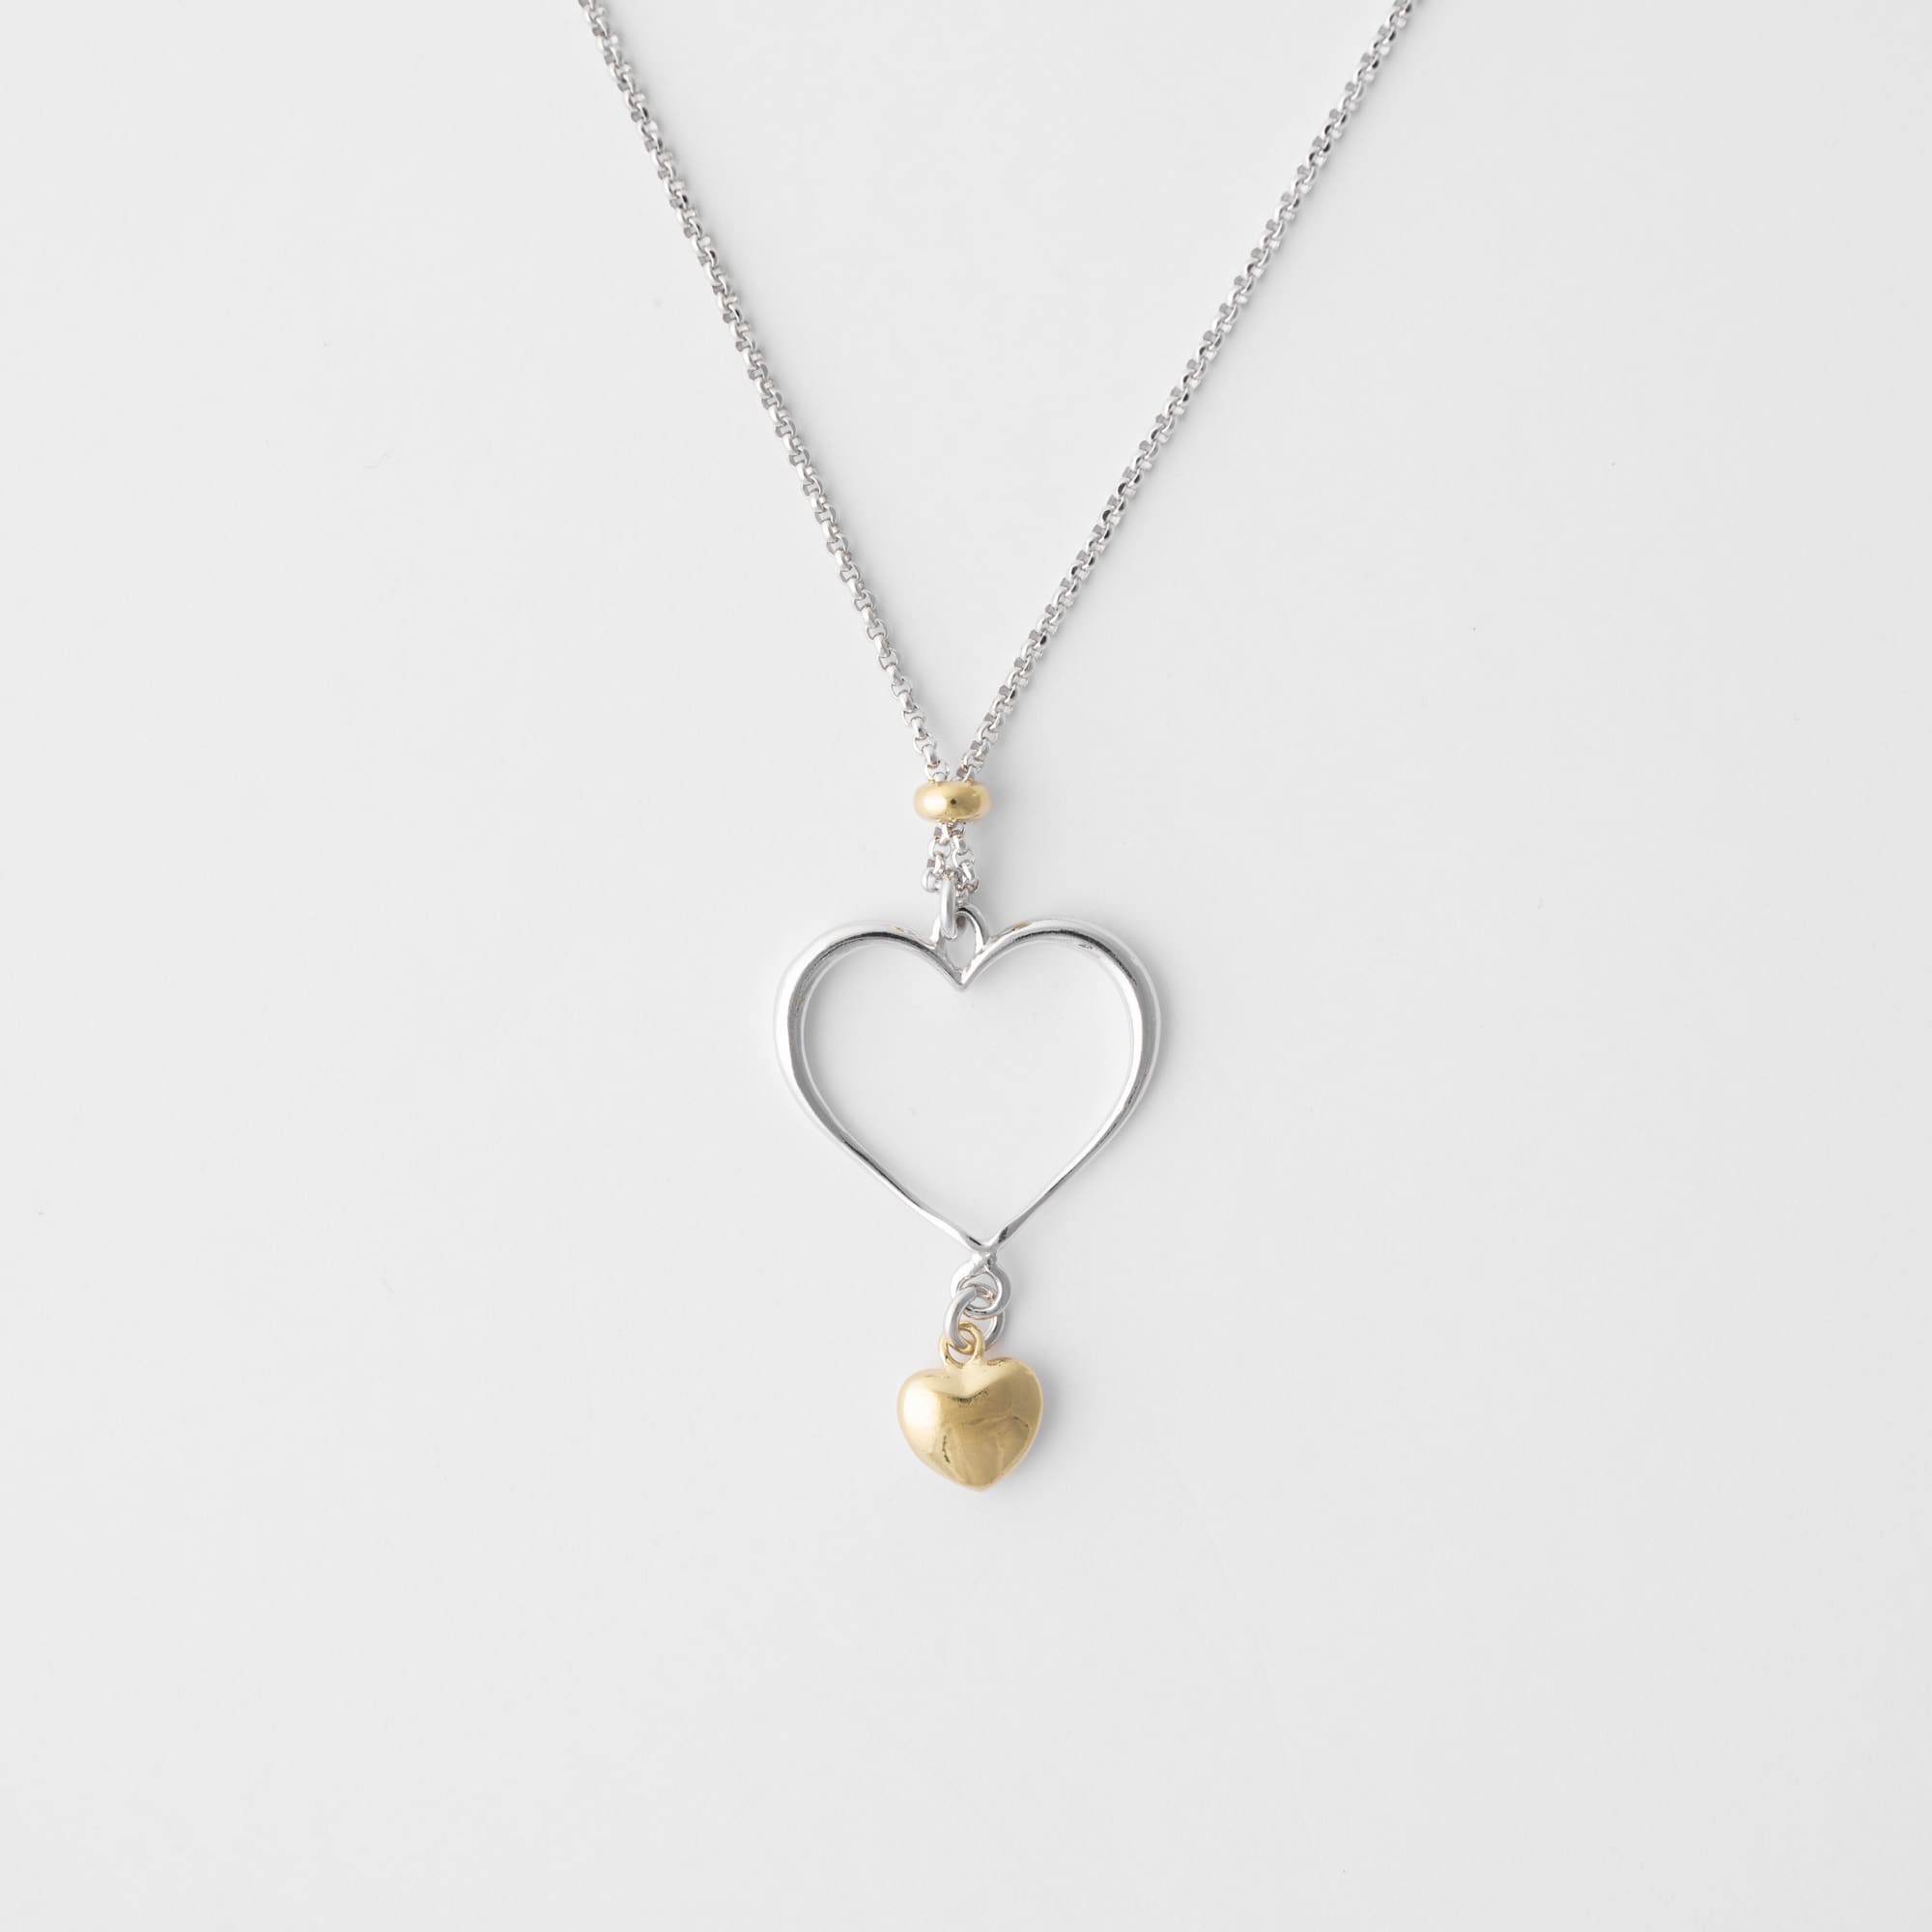 HEARTWAVE Dream necklace